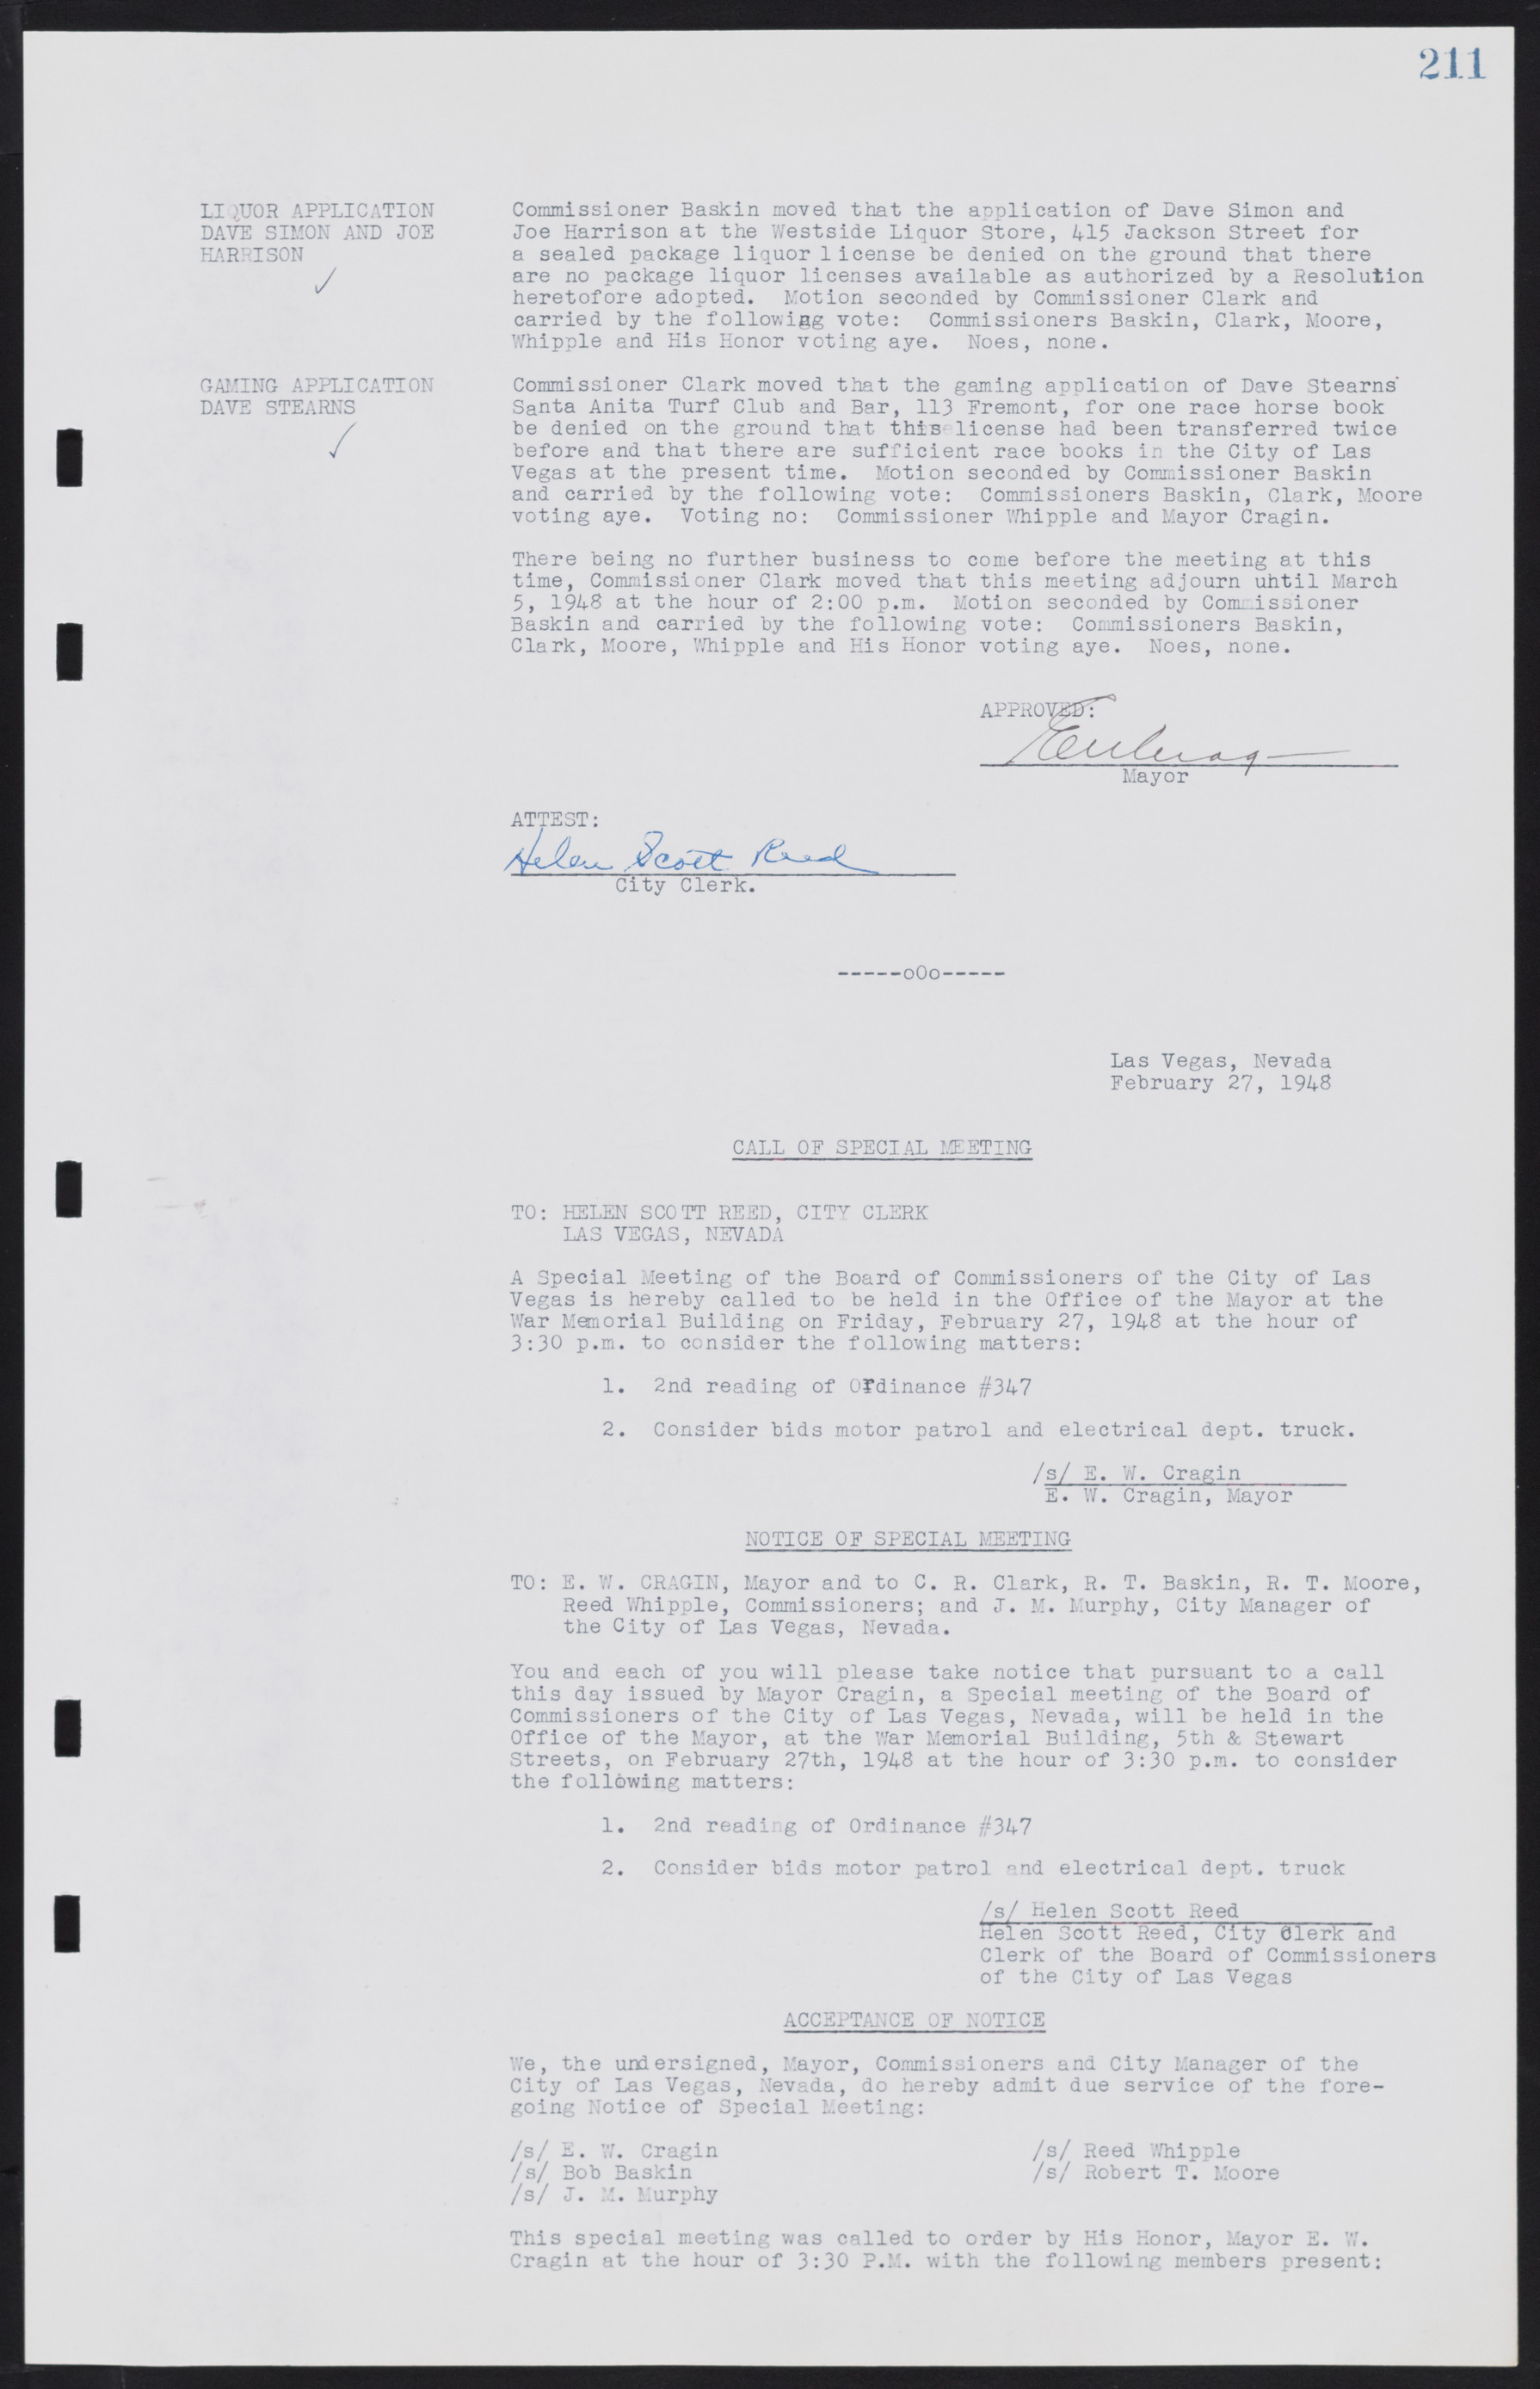 Las Vegas City Commission Minutes, January 7, 1947 to October 26, 1949, lvc000006-233